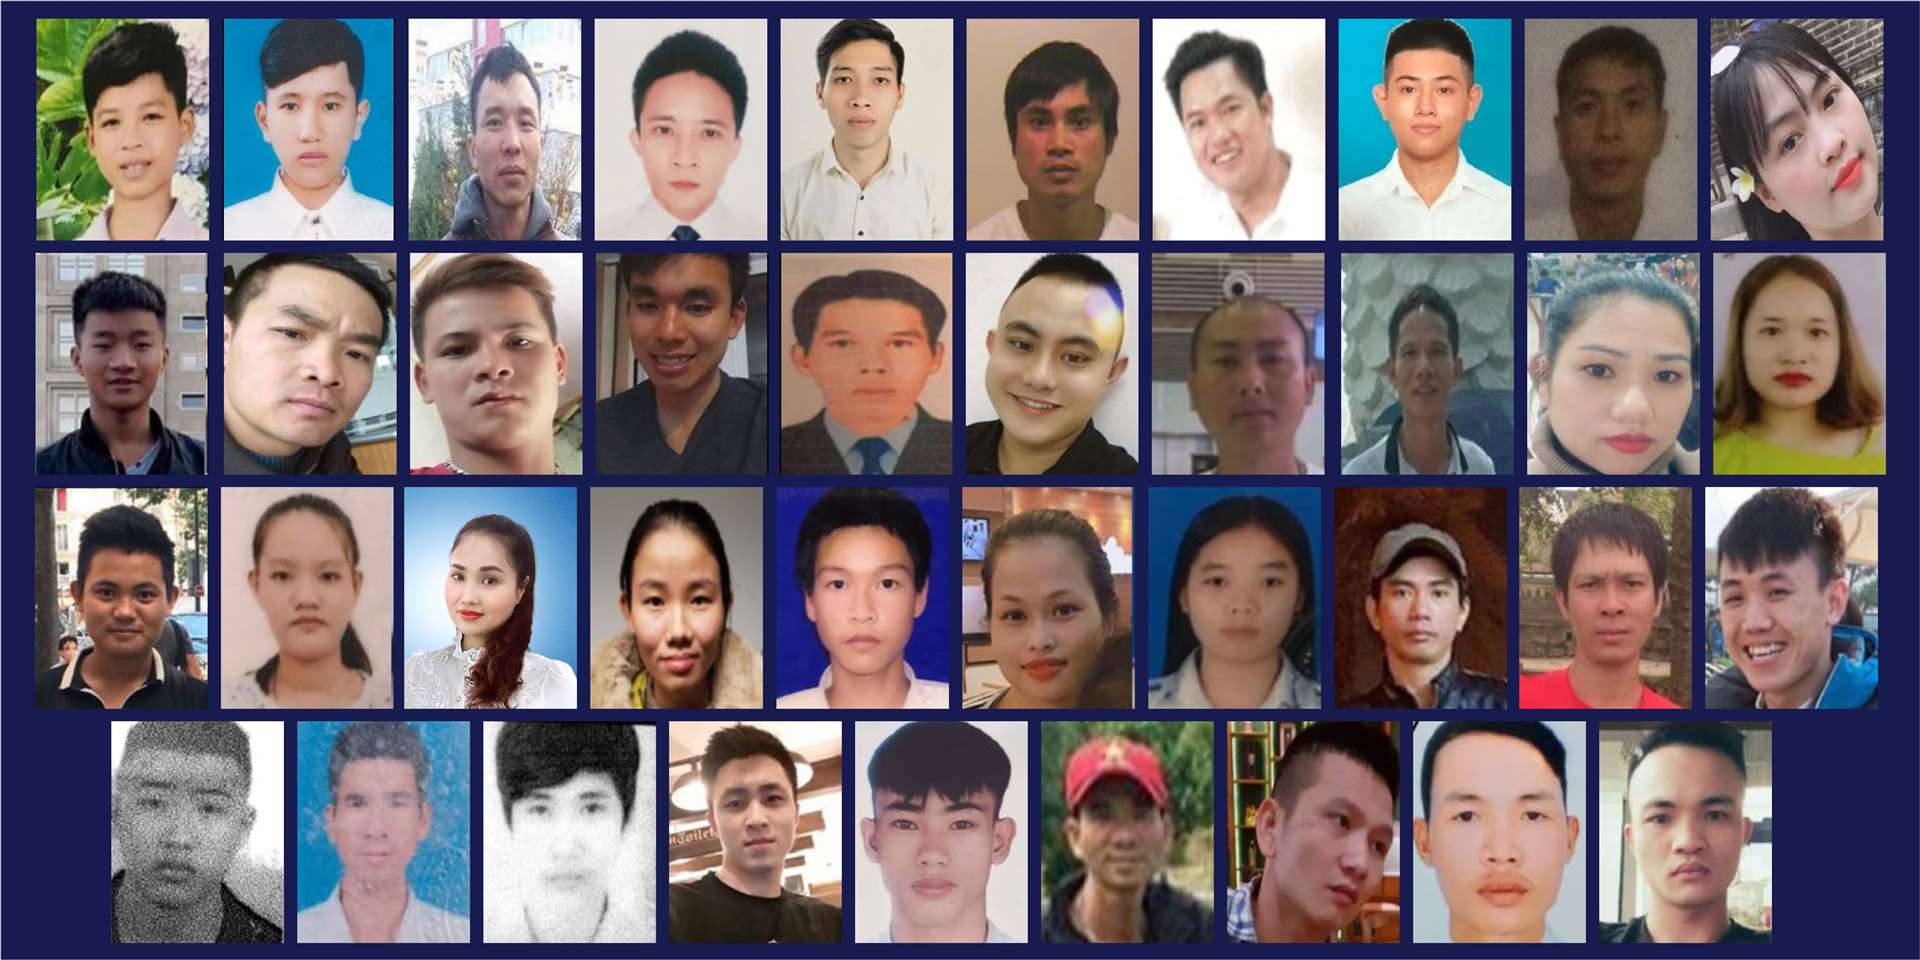 The 39 victims: (left to right top row) Dinh Dinh Binh, Nguyen Minh Quang, Nguyen Huy Phong, Le Van Ha, Nguyen Van Hiep, Bui Phan Thang, Nguyen Van Hung, Nguyen Huy Hung, Nguyen Tien Dung, Pham Thi Tra My, (left to right second row) Tran Khanh Tho, Nguyen Van Nhan, Vo Ngoc Nam, Vo Van Linh, Nguyen Ba Vu Hung, Vo Nhan Du, Tran Hai Loc, Tran Manh Hung, Nguyen Thi Van, Bui Thi Nhung, (third row left to right) Hoang Van Tiep, Tran Thi Ngoc, Phan Thi Thanh,Tran Thi Tho, Duong Minh Tuan, Pham Thi Ngoc Oanh, Tran Thi Mai Nhung, Le Trong Thanh, Nguyen Ngoc Ha, Hoang Van Hoi, (bottom row left to right) Tran Ngoc Hieu, Cao Tien Dung, Dinh Dinh Thai Quyen, Dang Huu Tuyen, Nguyen Dinh Luong , Cao Huy Thanh, Nguyen Trong Thai, Nguyen Tho Tuan and Nguyen Dinh Tu (Essex Police/PA)